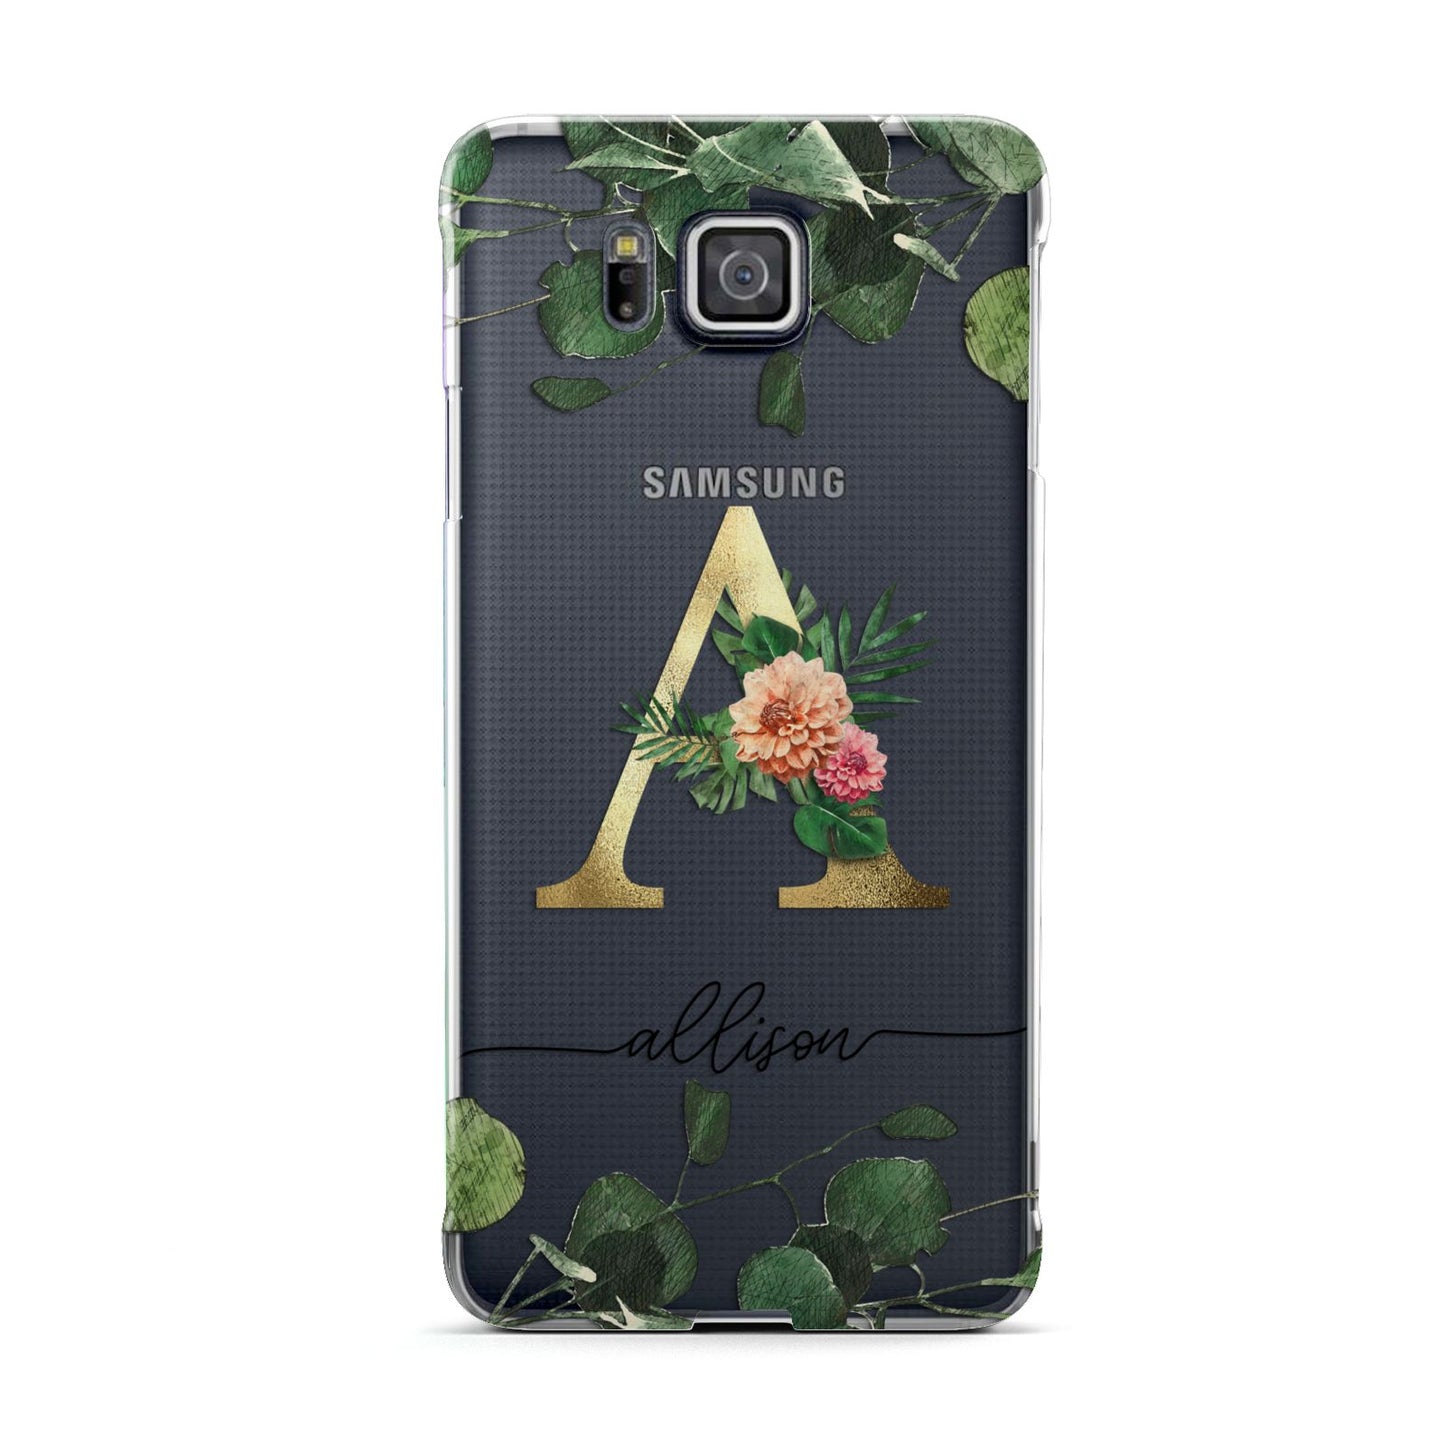 Personalised Forest Monogram Samsung Galaxy Alpha Case